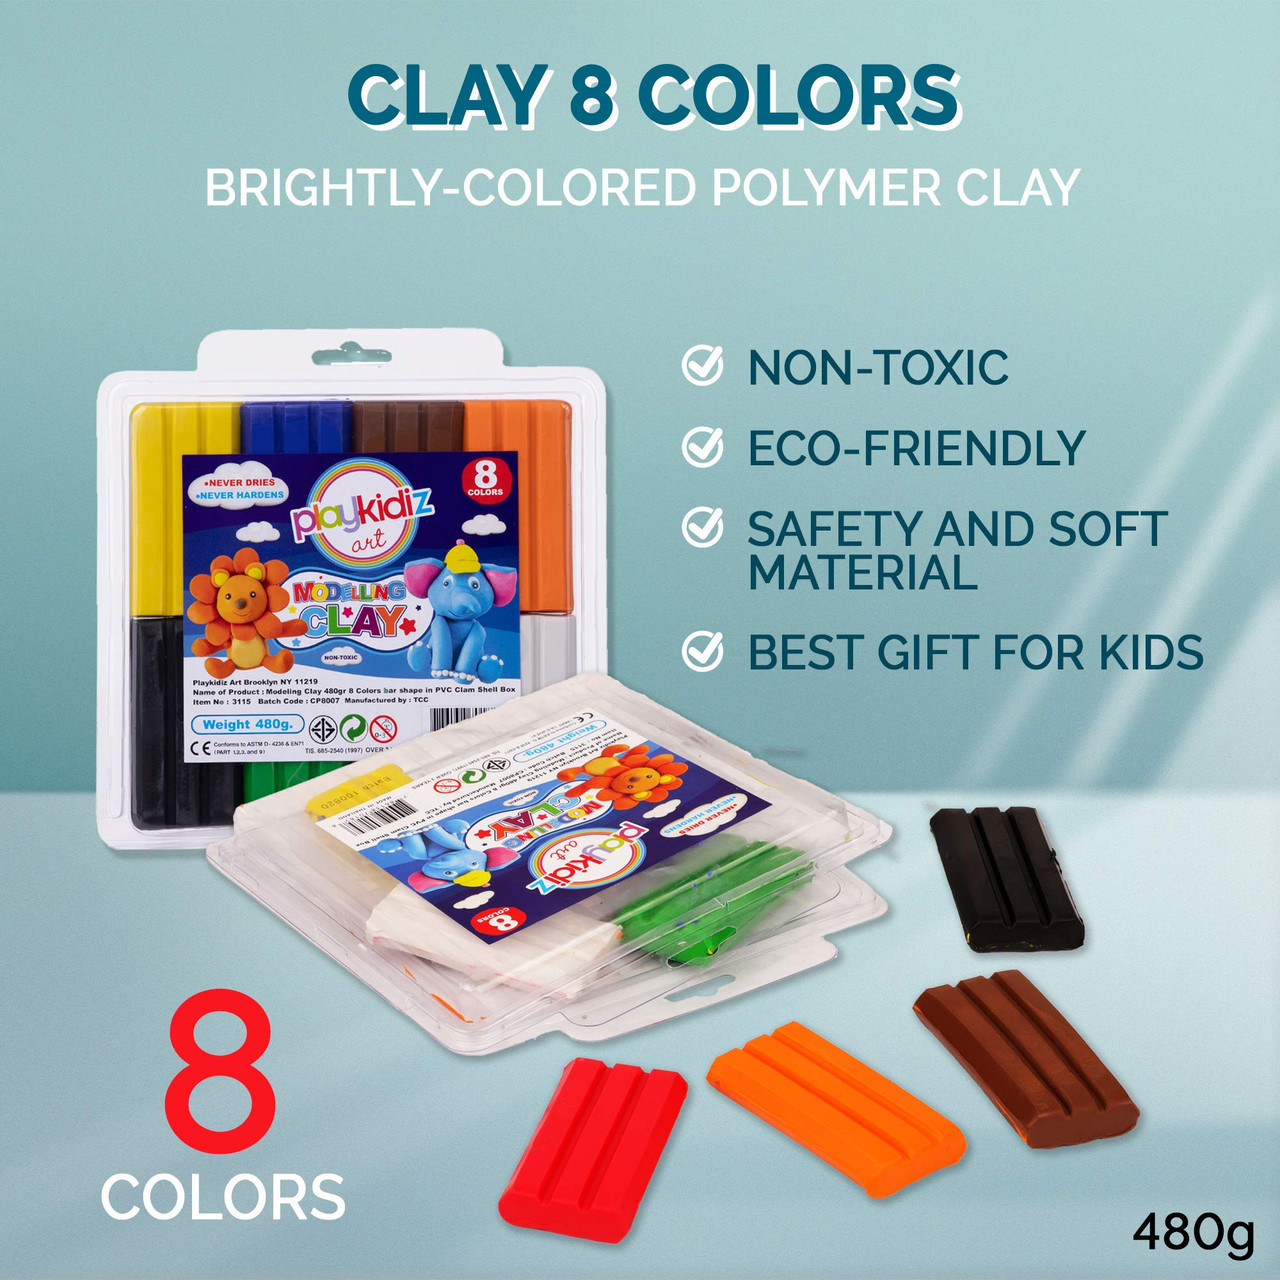 Playkidiz Art Modeling Clay 10 Colors, Beginners Pack, STEM Educational DIY  Molding Set, at Home Crafts for Kids - Toys 4 U